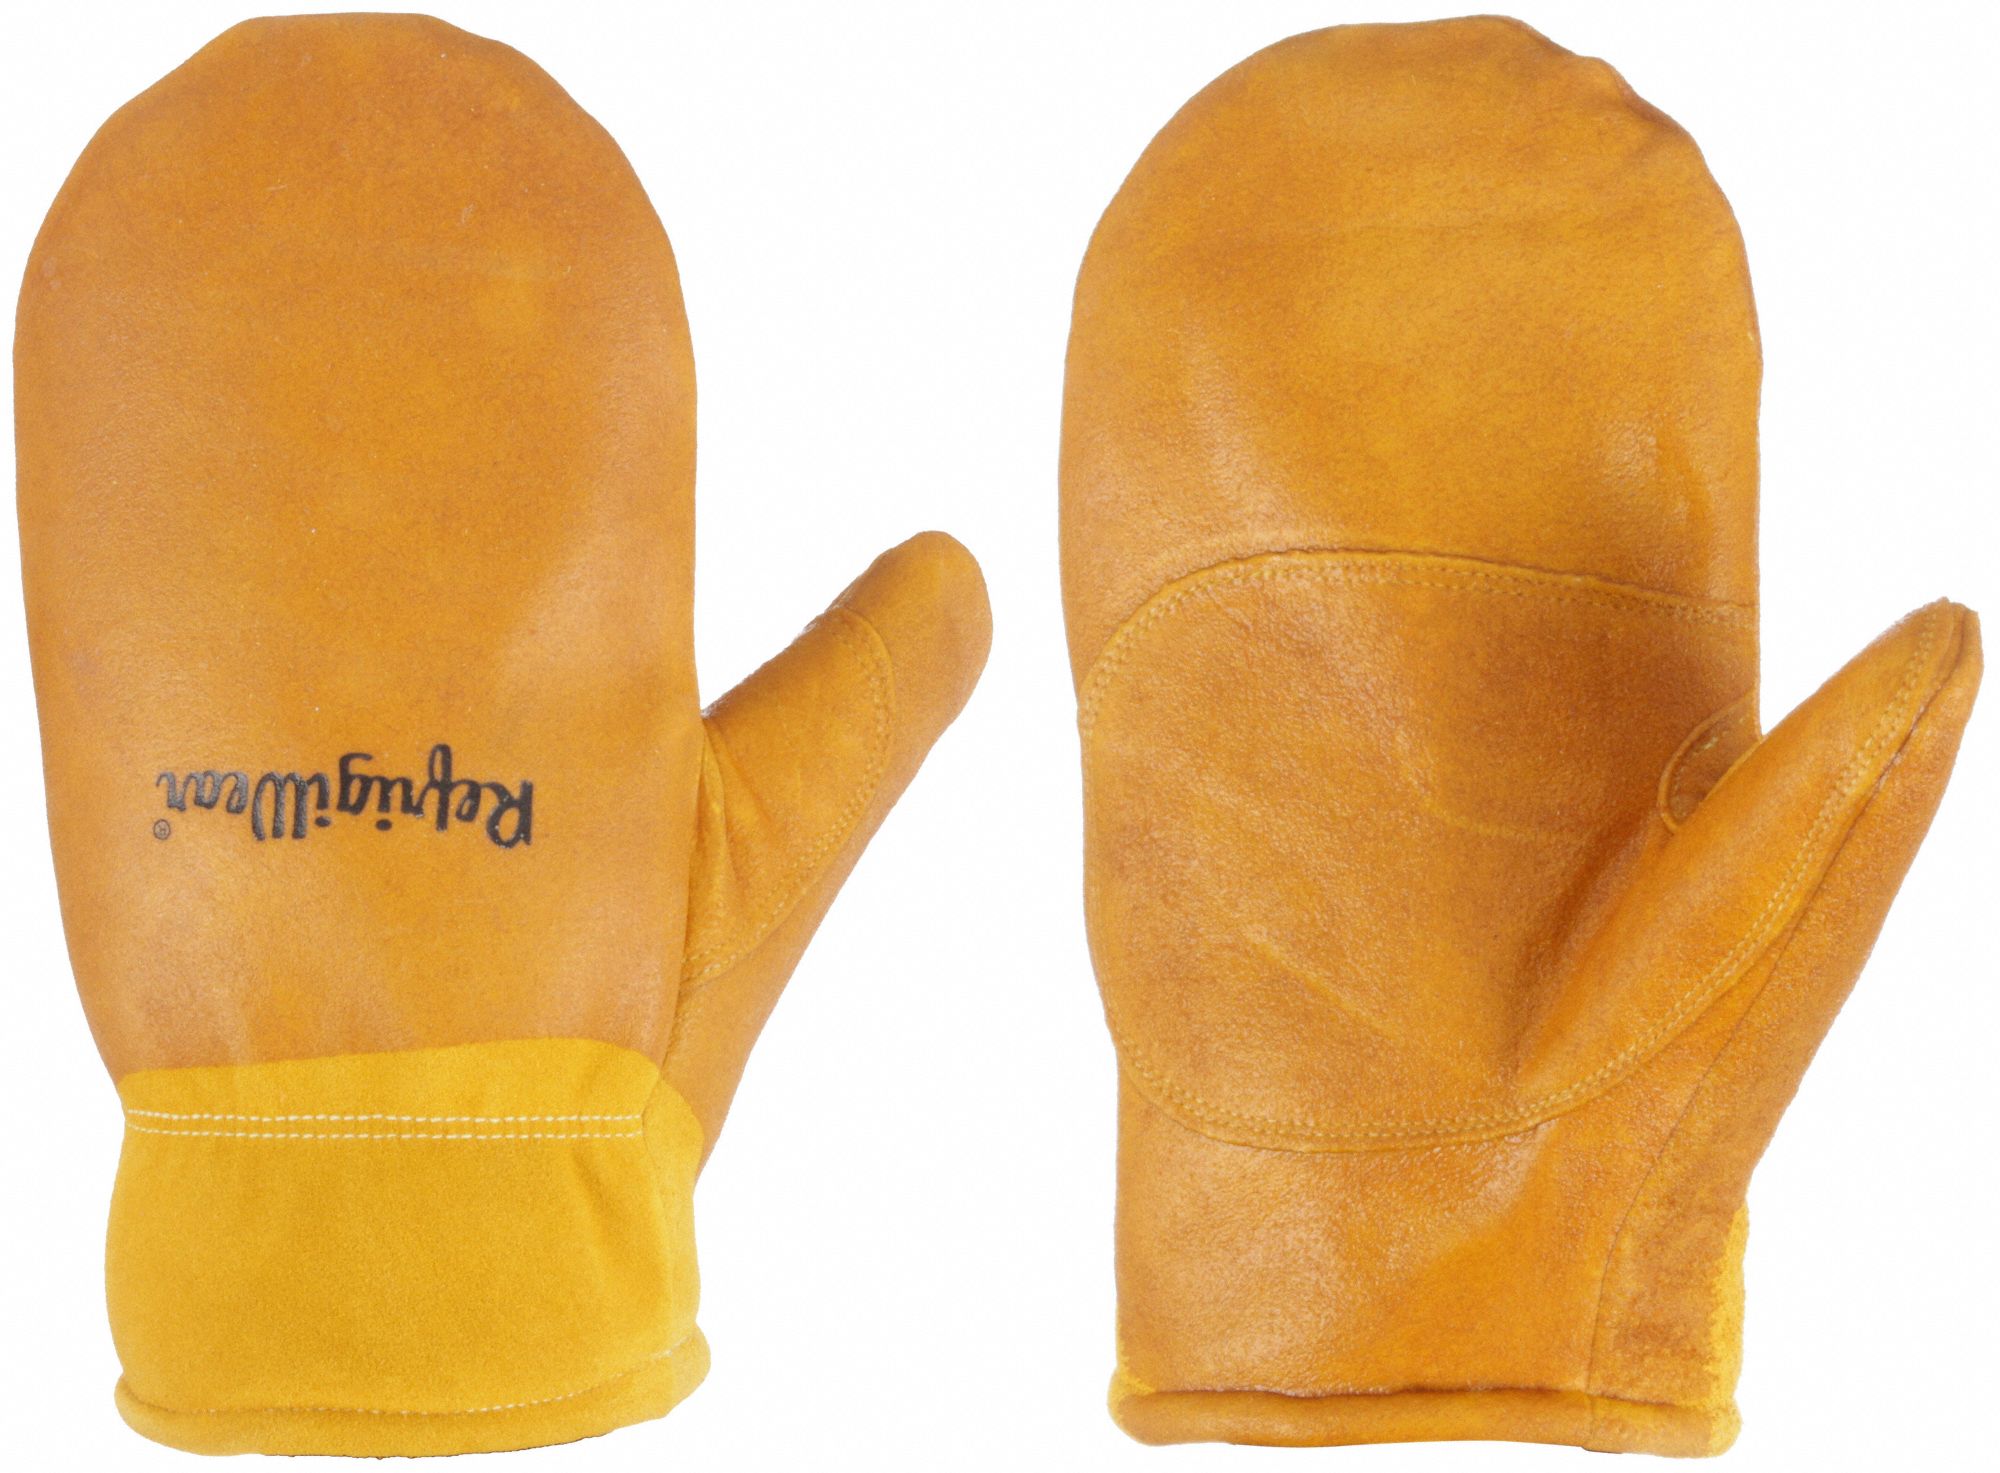 REFRIGIWEAR, L ( 9 ), -25°F Min Temp, Leather Gloves - 56KC82